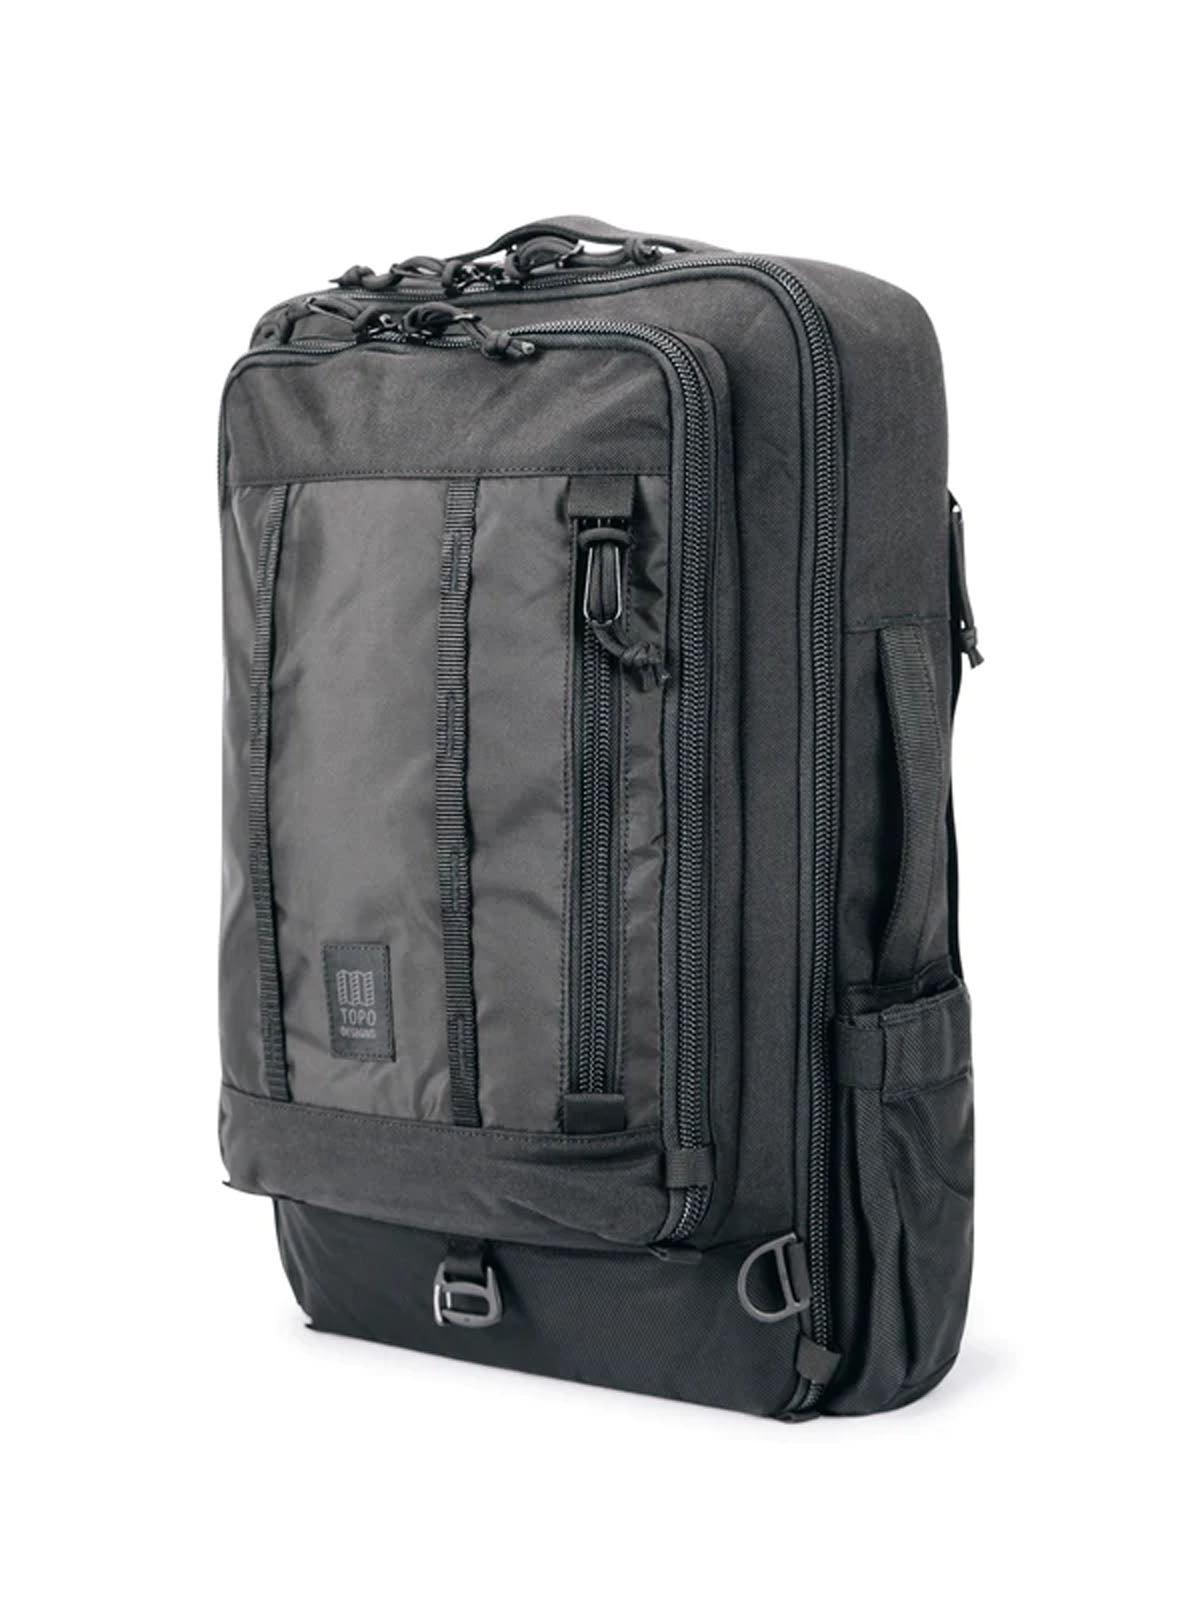 Topo Designs Global Travel Bag 30L